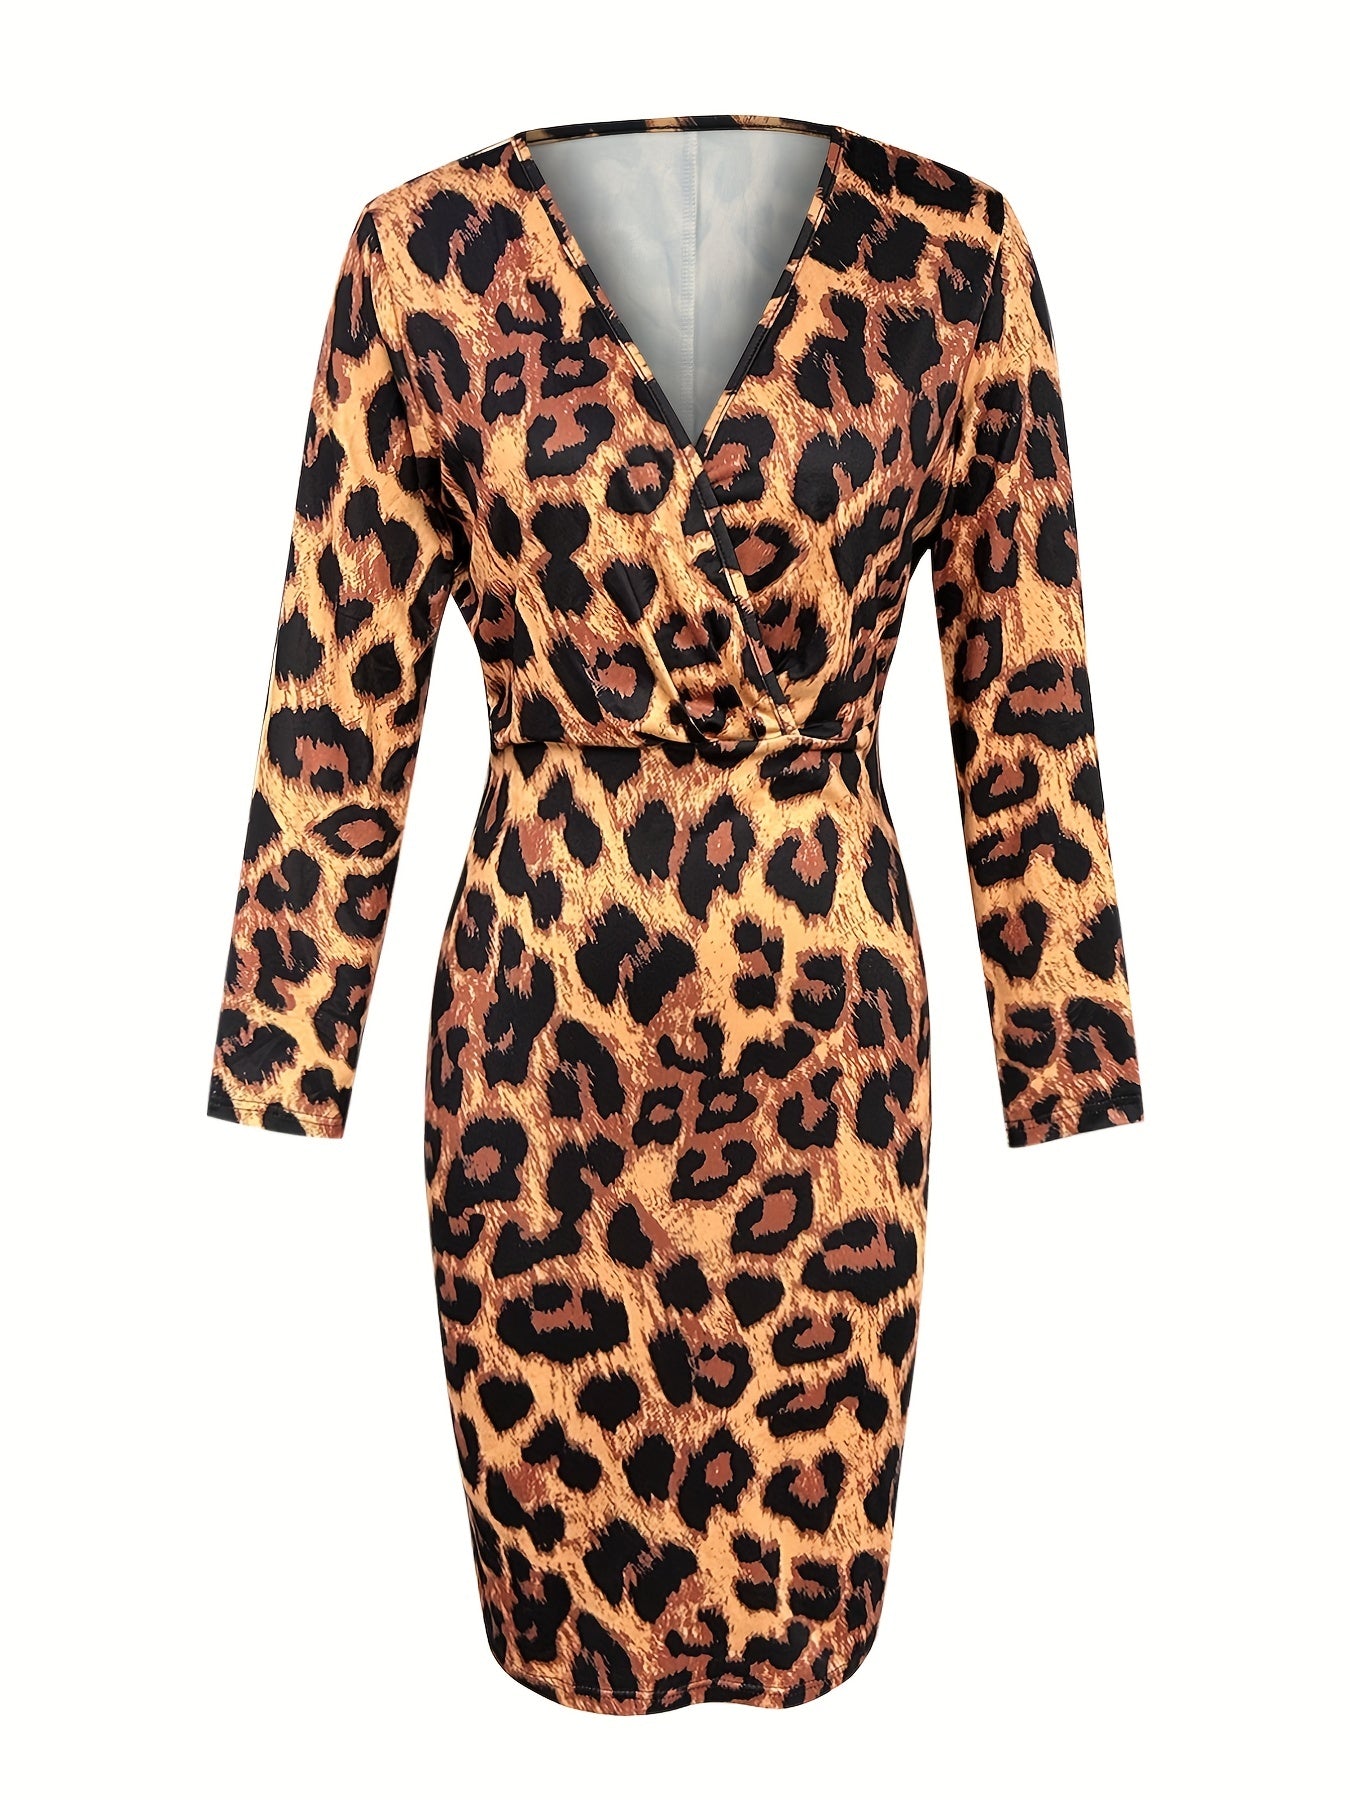 vlovelaw  Leopard Print Bodycon Dress, Sexy Long Sleeve Surplice Neck Dress, Women's Clothing